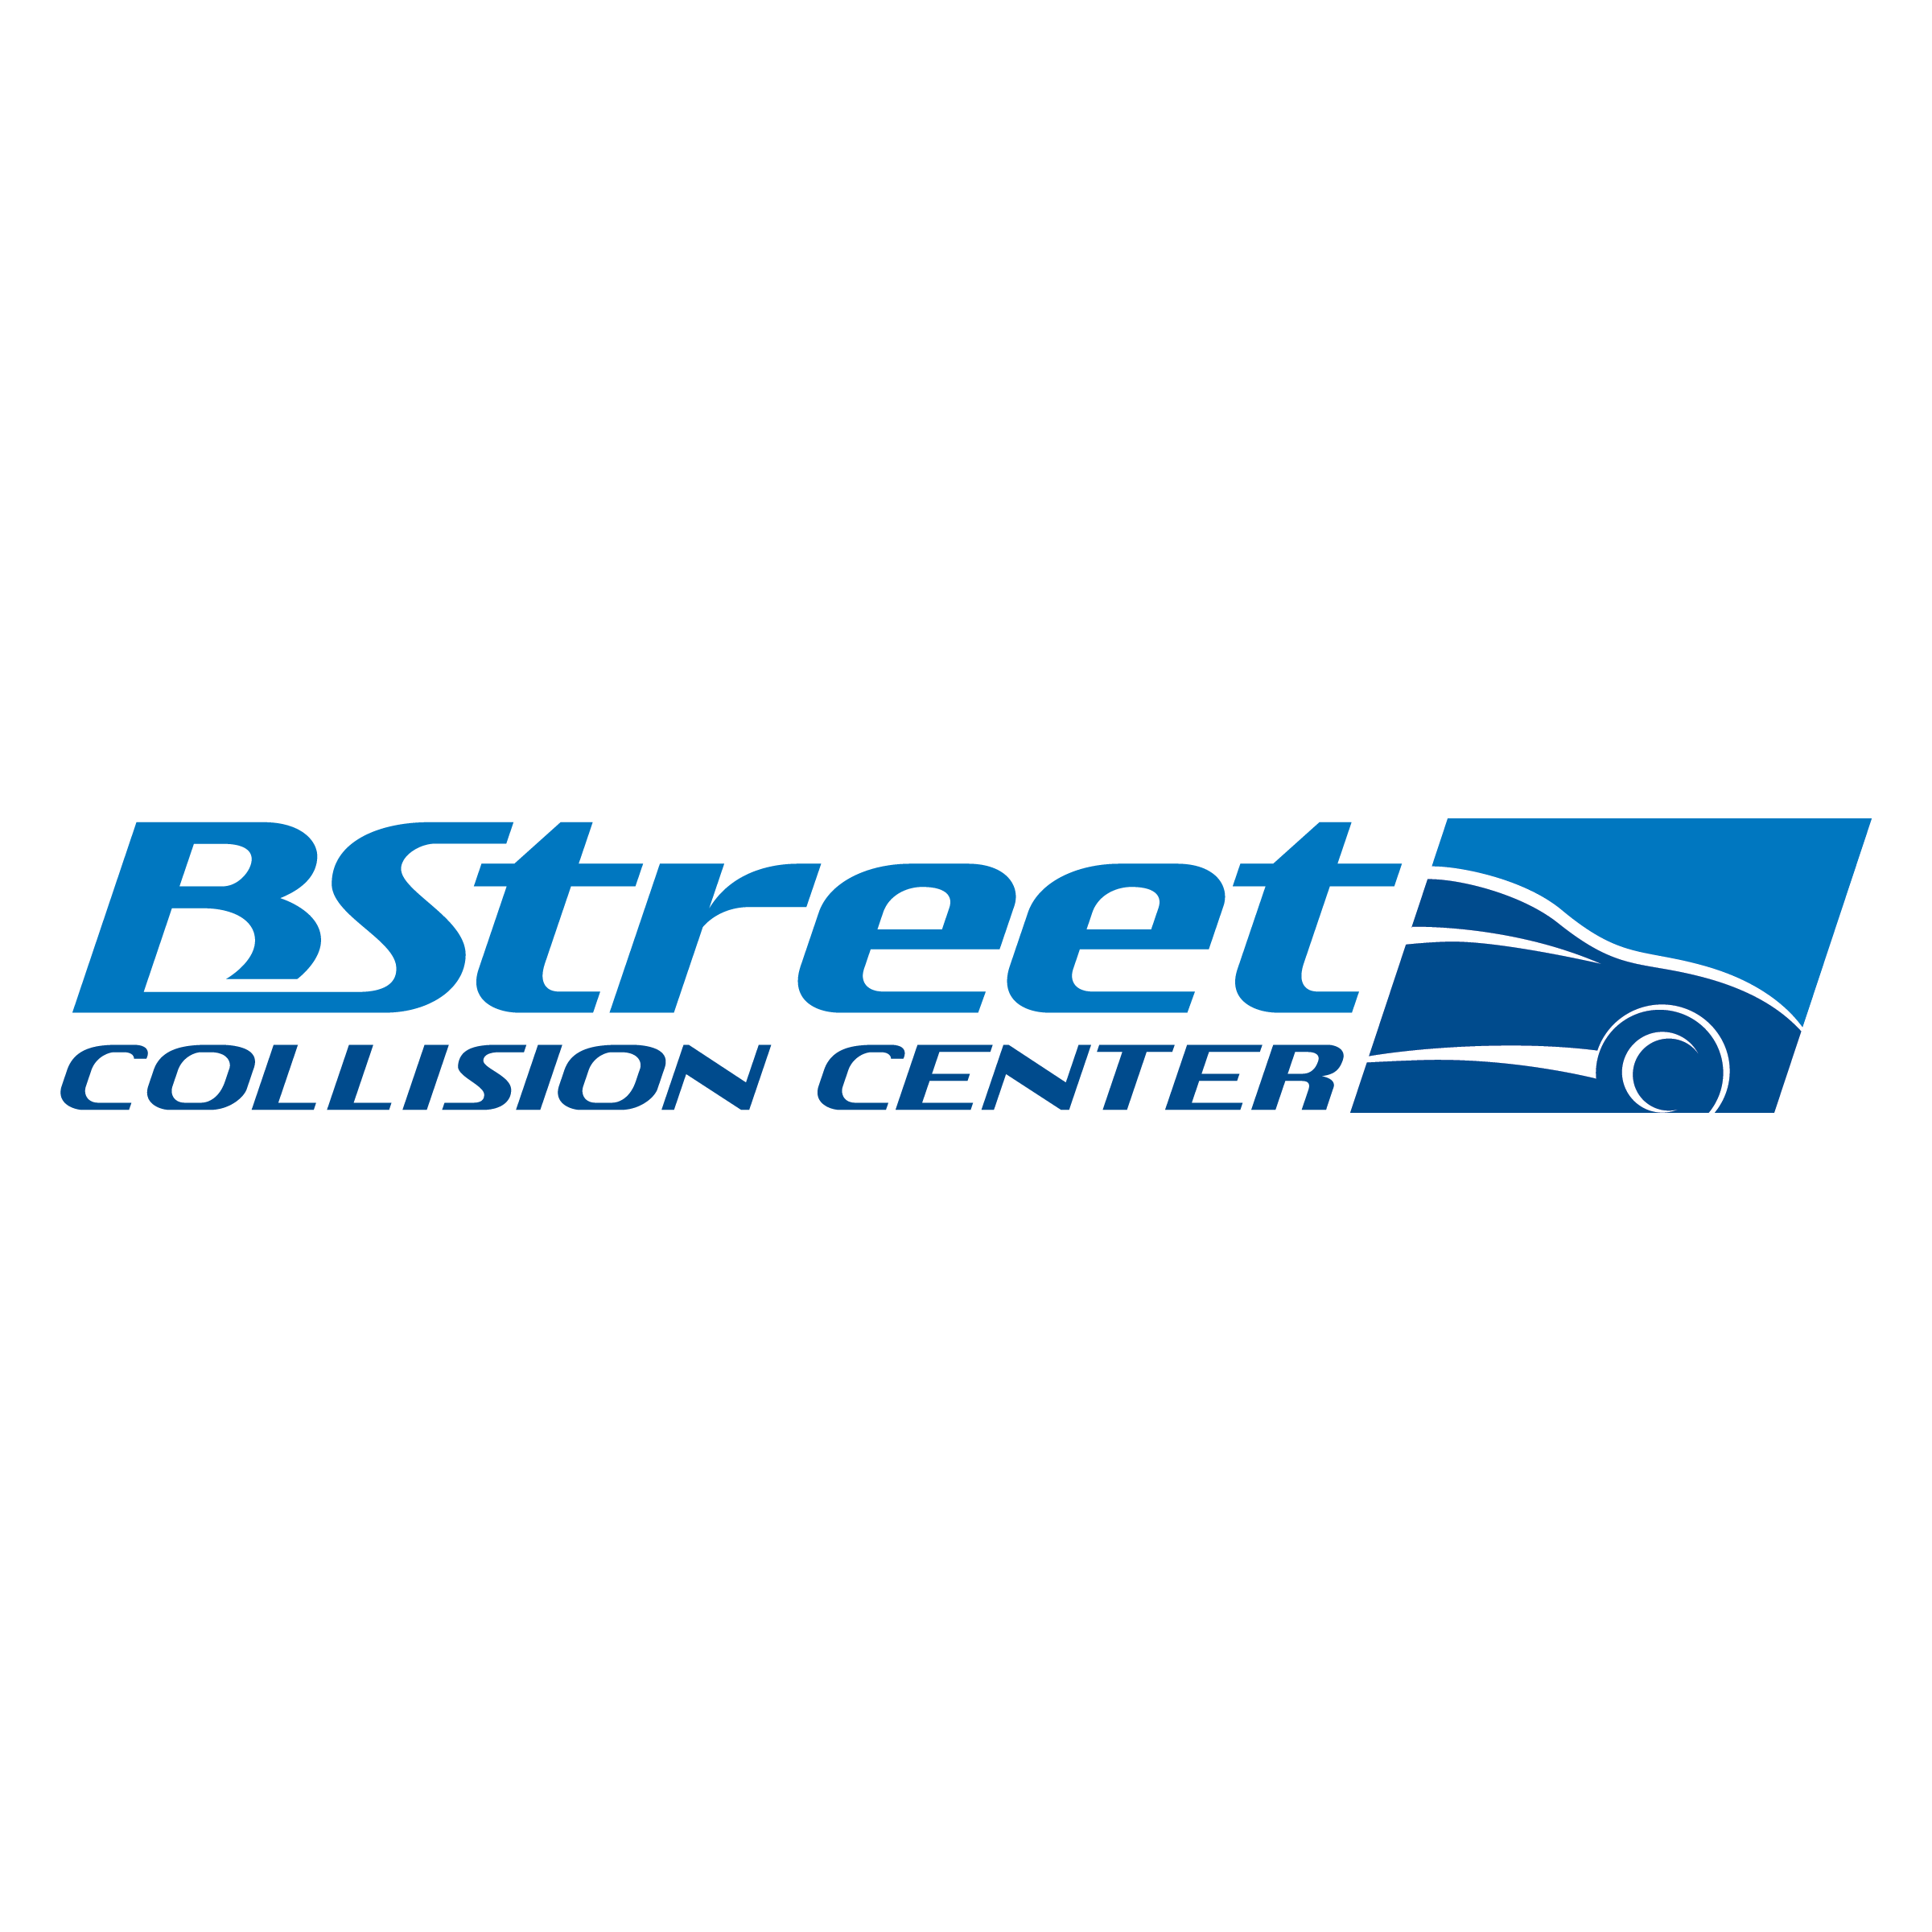 B Street Collision Center Logo